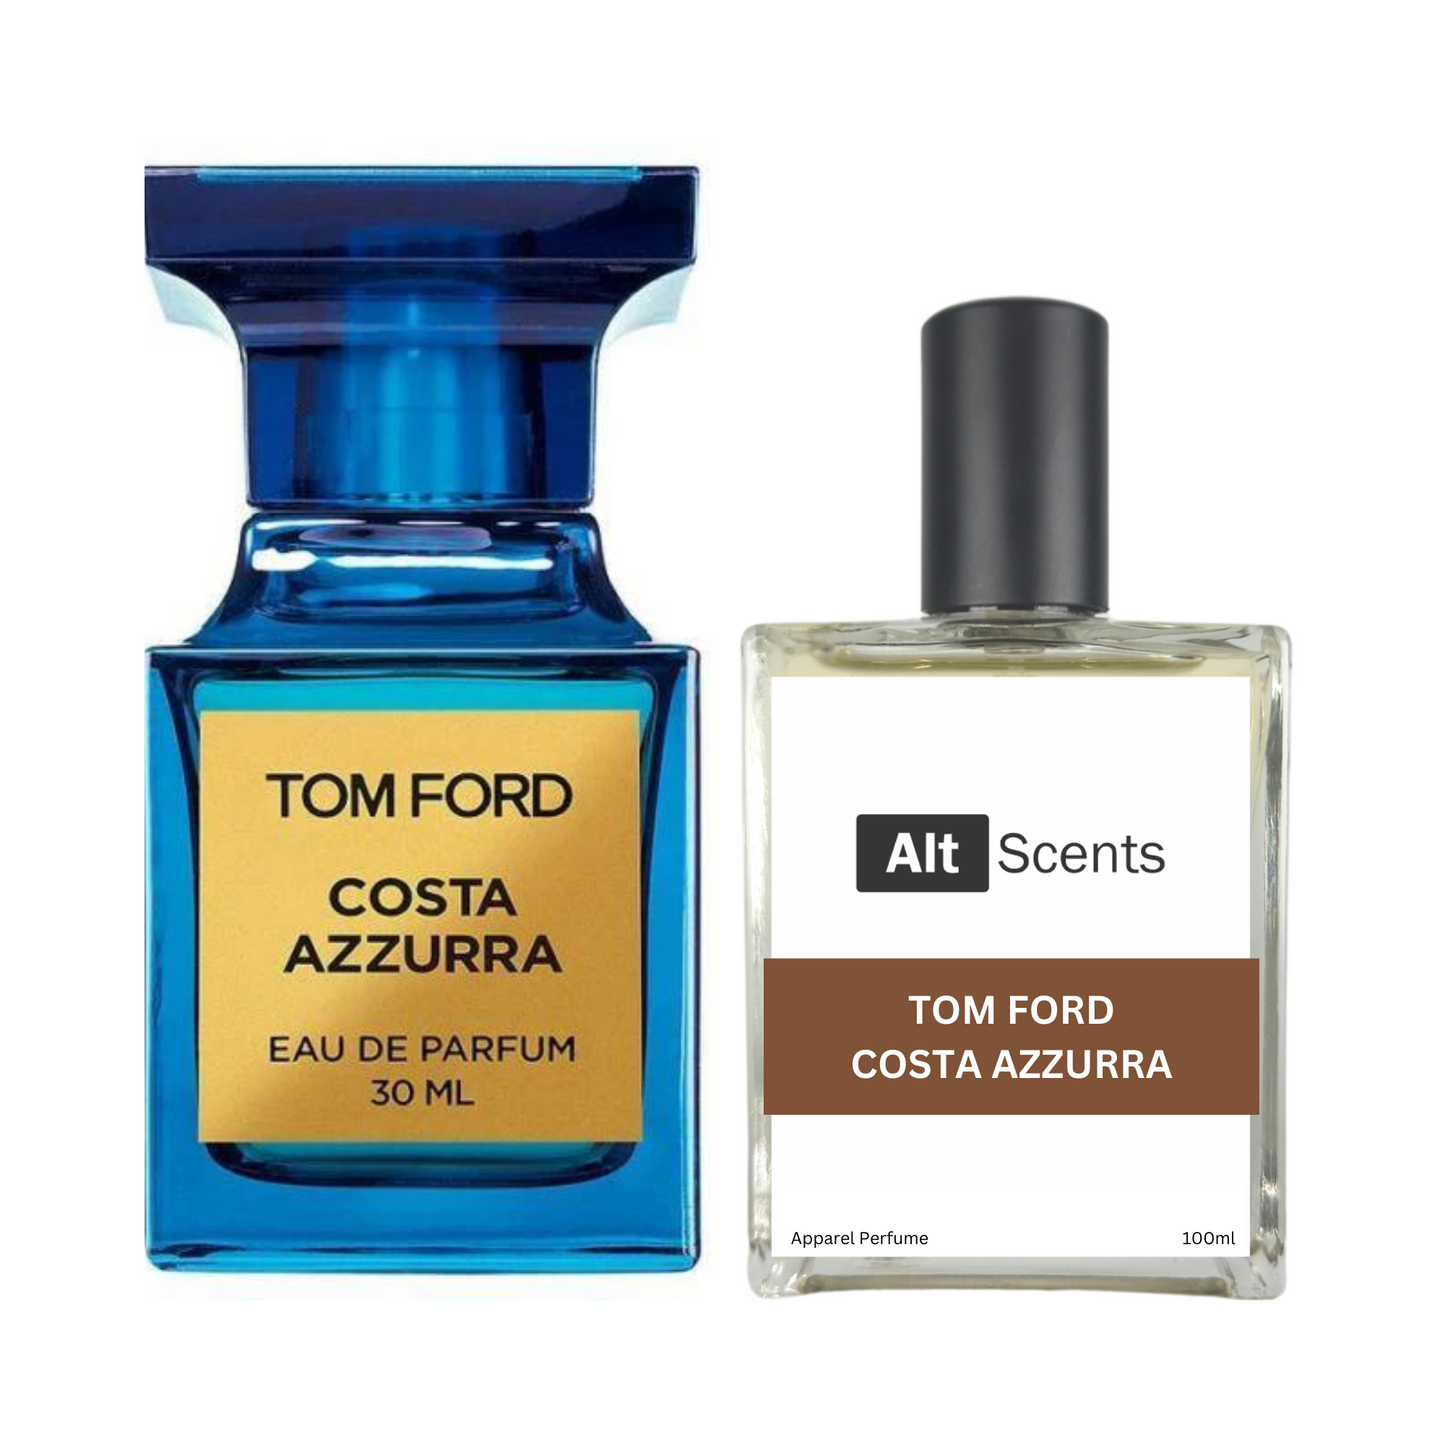 Tom Ford Costa Azzurra type Perfume for Unisex